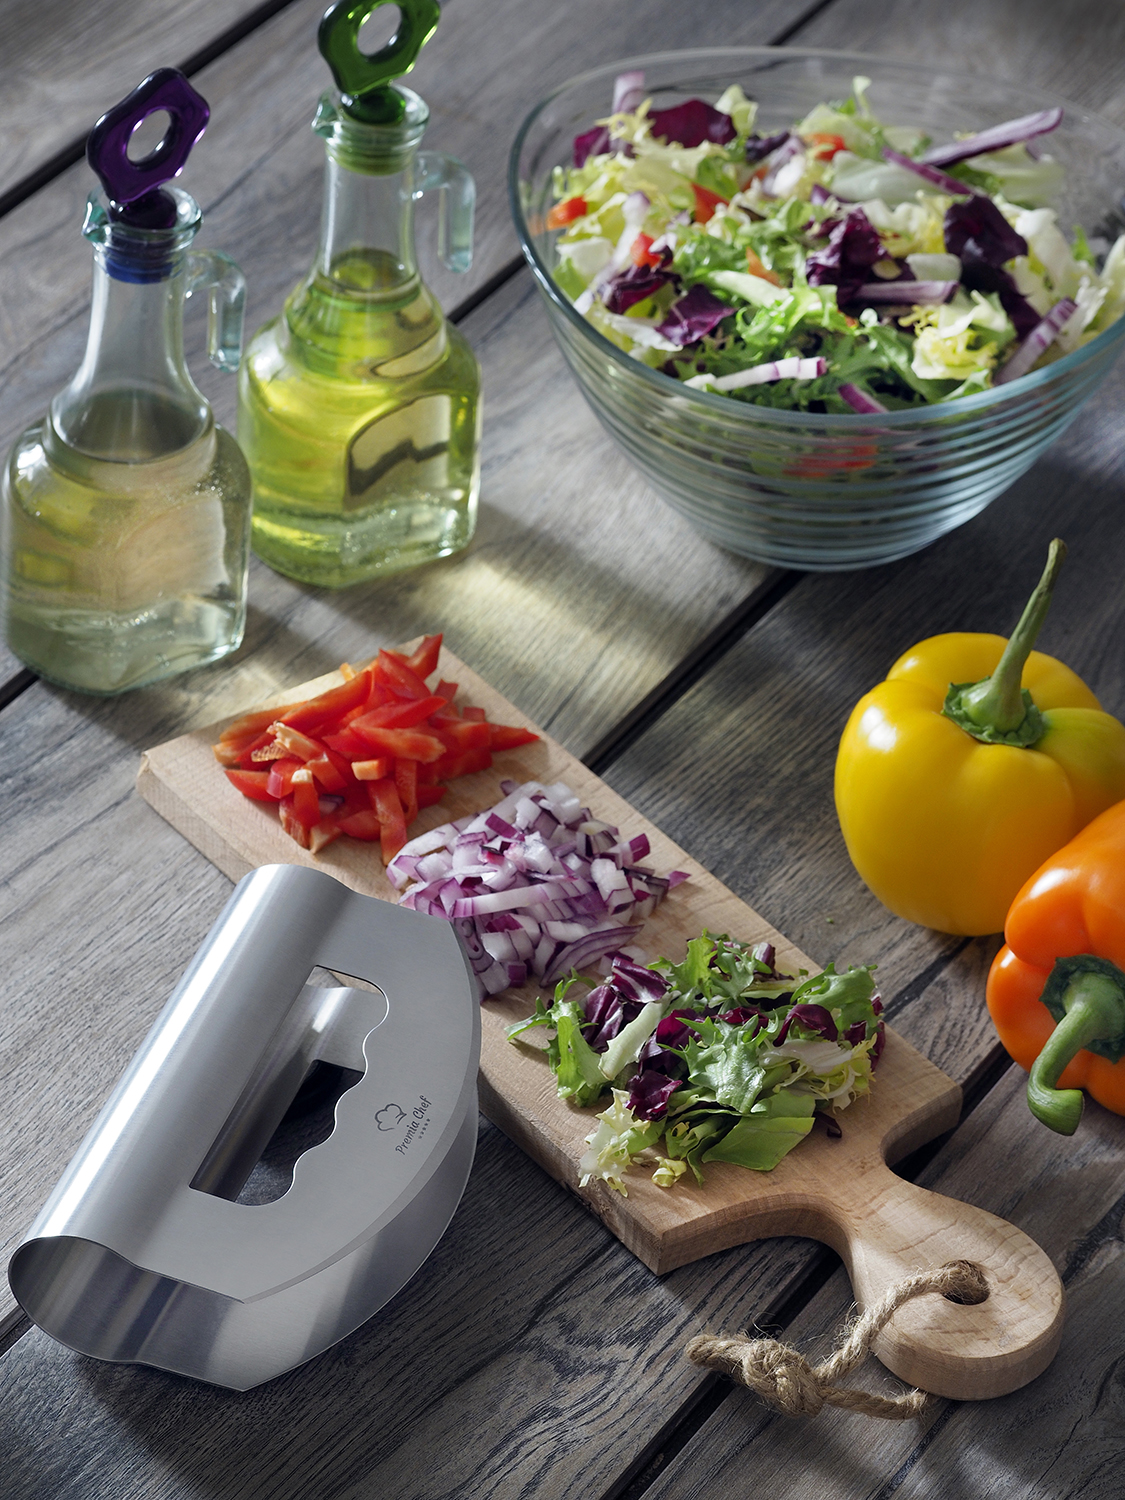 Salad Chopper, Double Bladed Stainless Steel Mezzaluna Lettuce Vegetables  Cutter Slicing Tool Home Kitchen & Restaurant